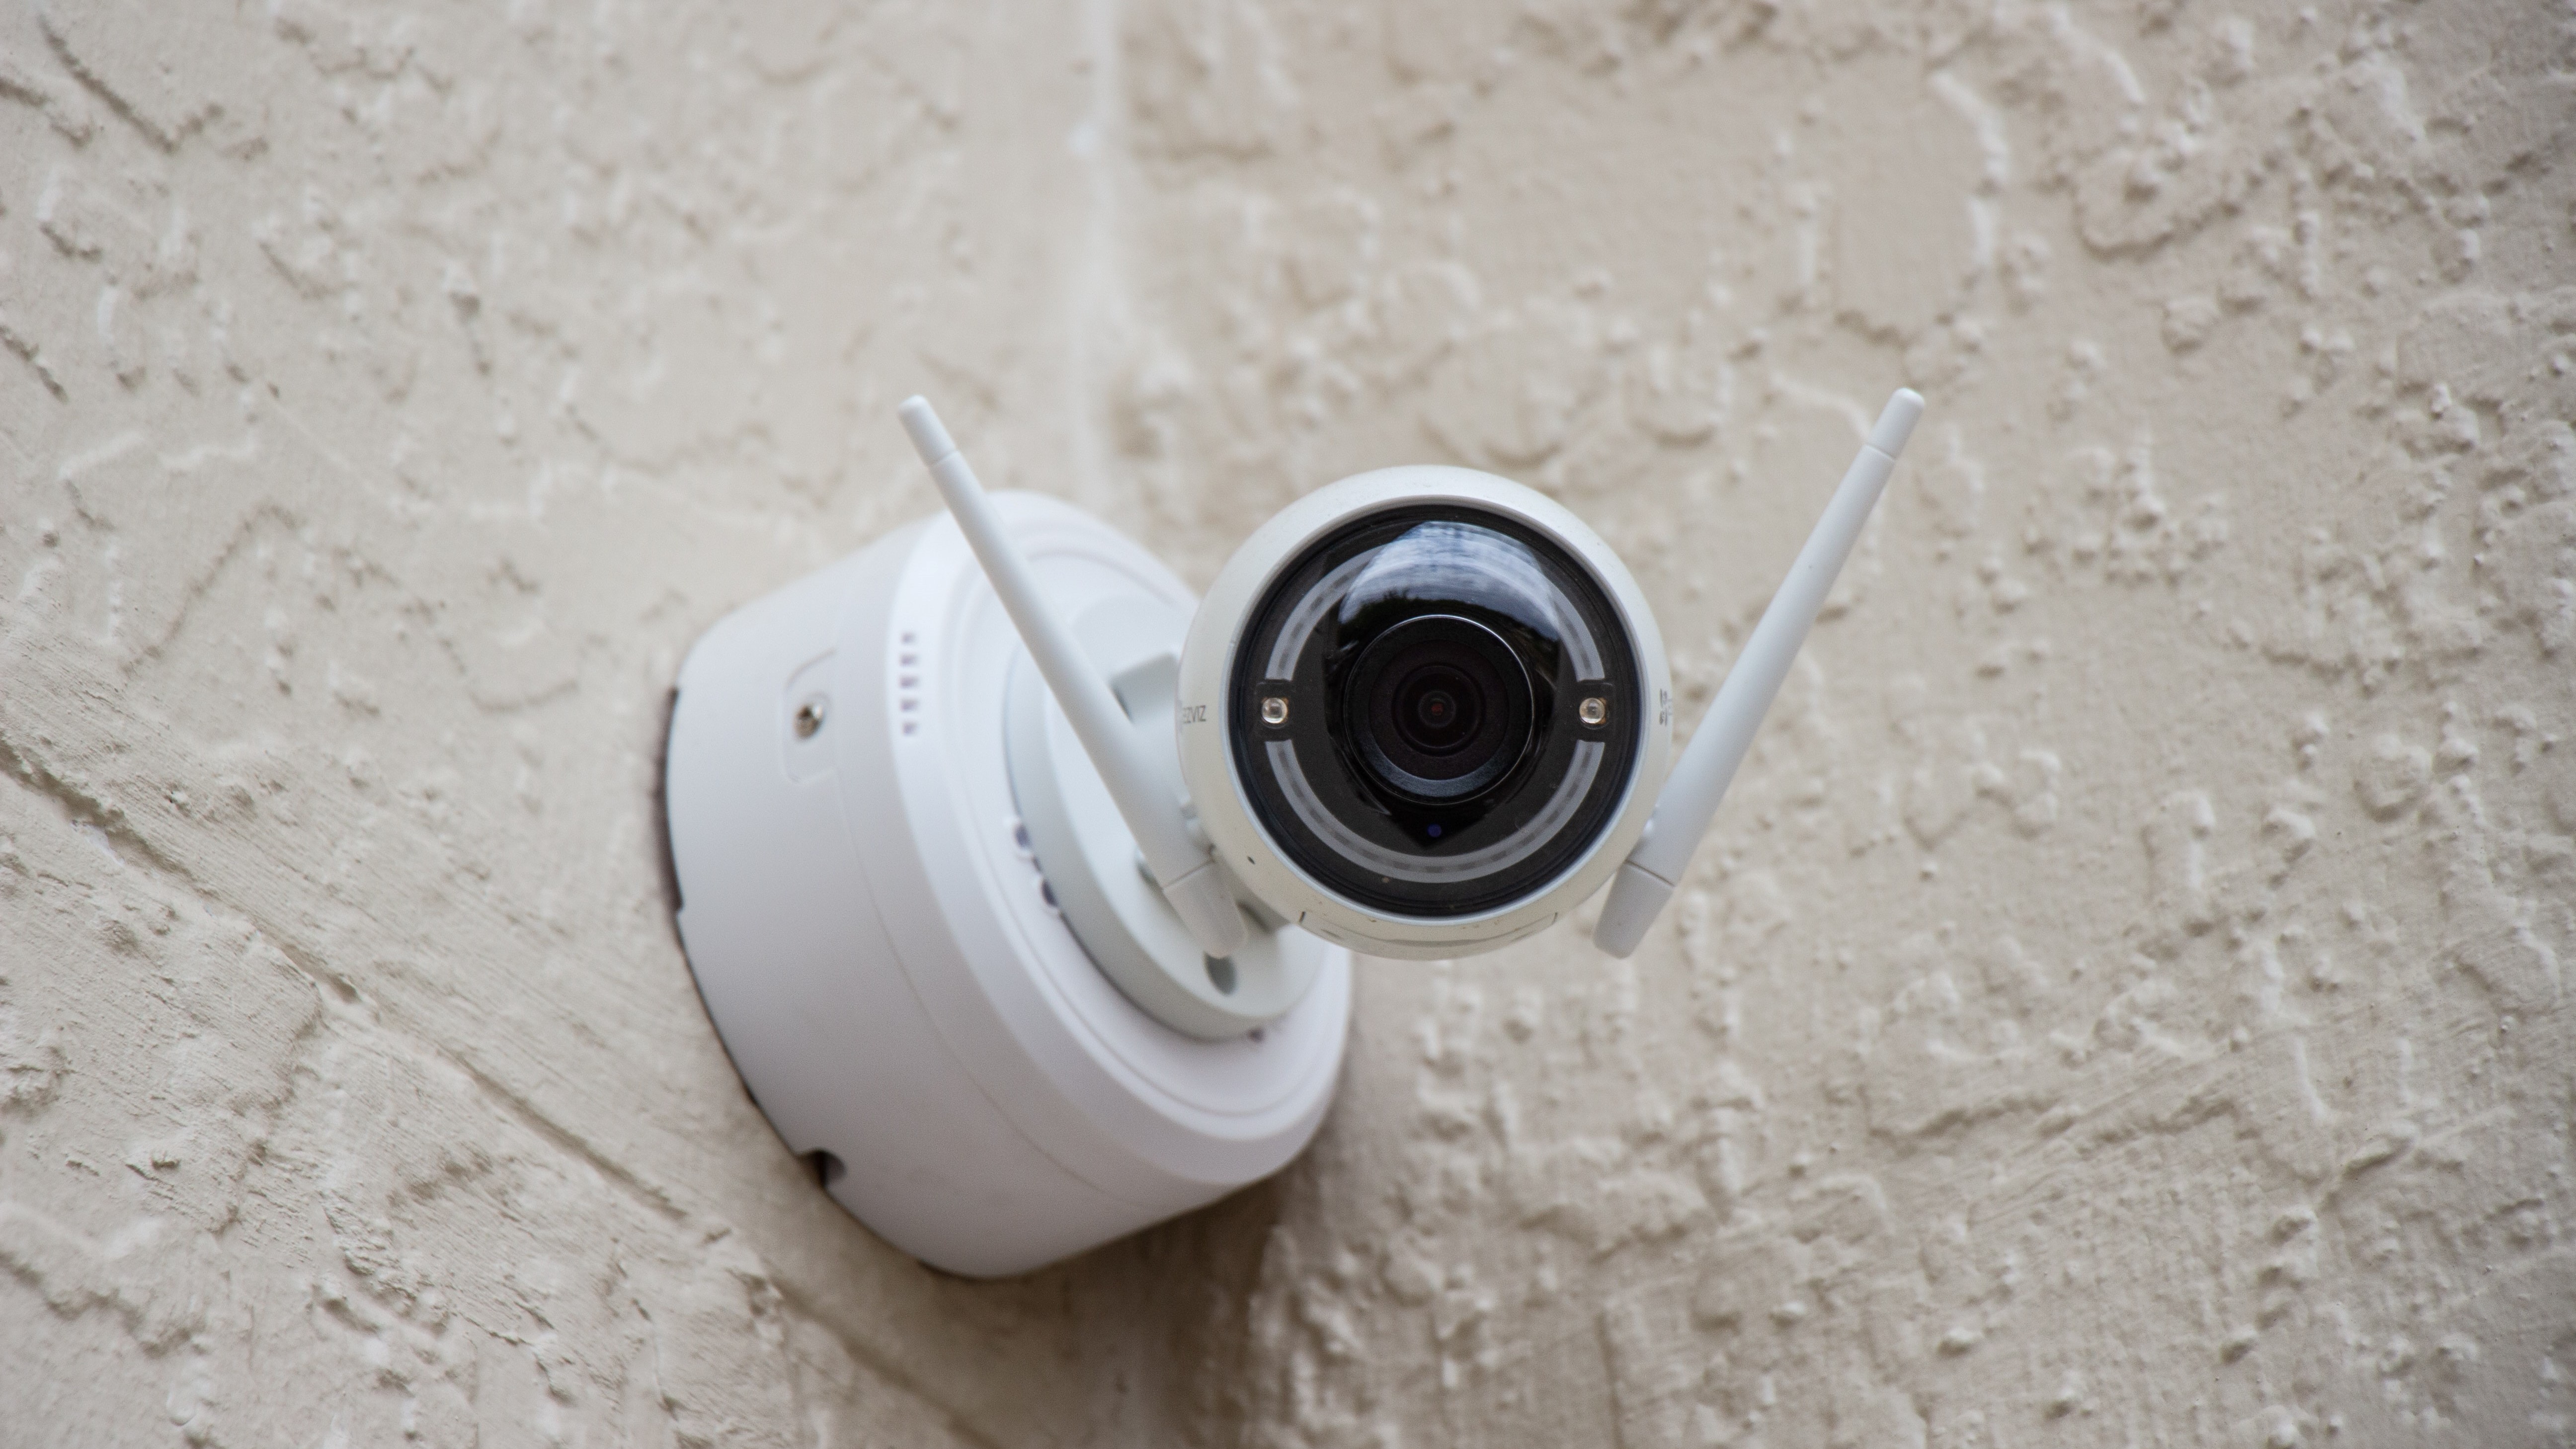 Lot of 10 WATERPROOF METAL Security CCTV Surveillance Video Camera Warning Signs 